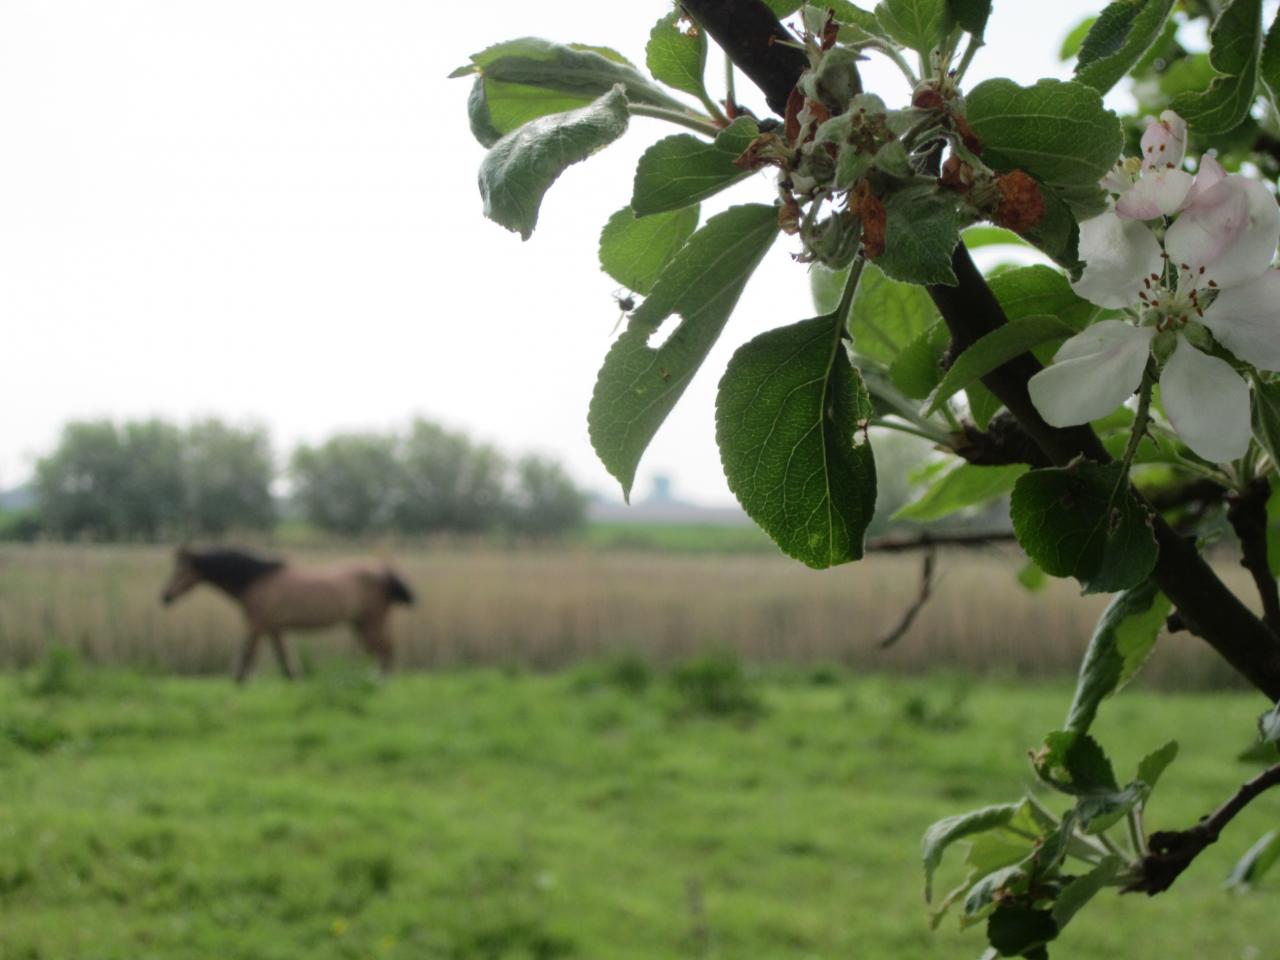 2014-05-01 exteriieur ferme cheval ane poney